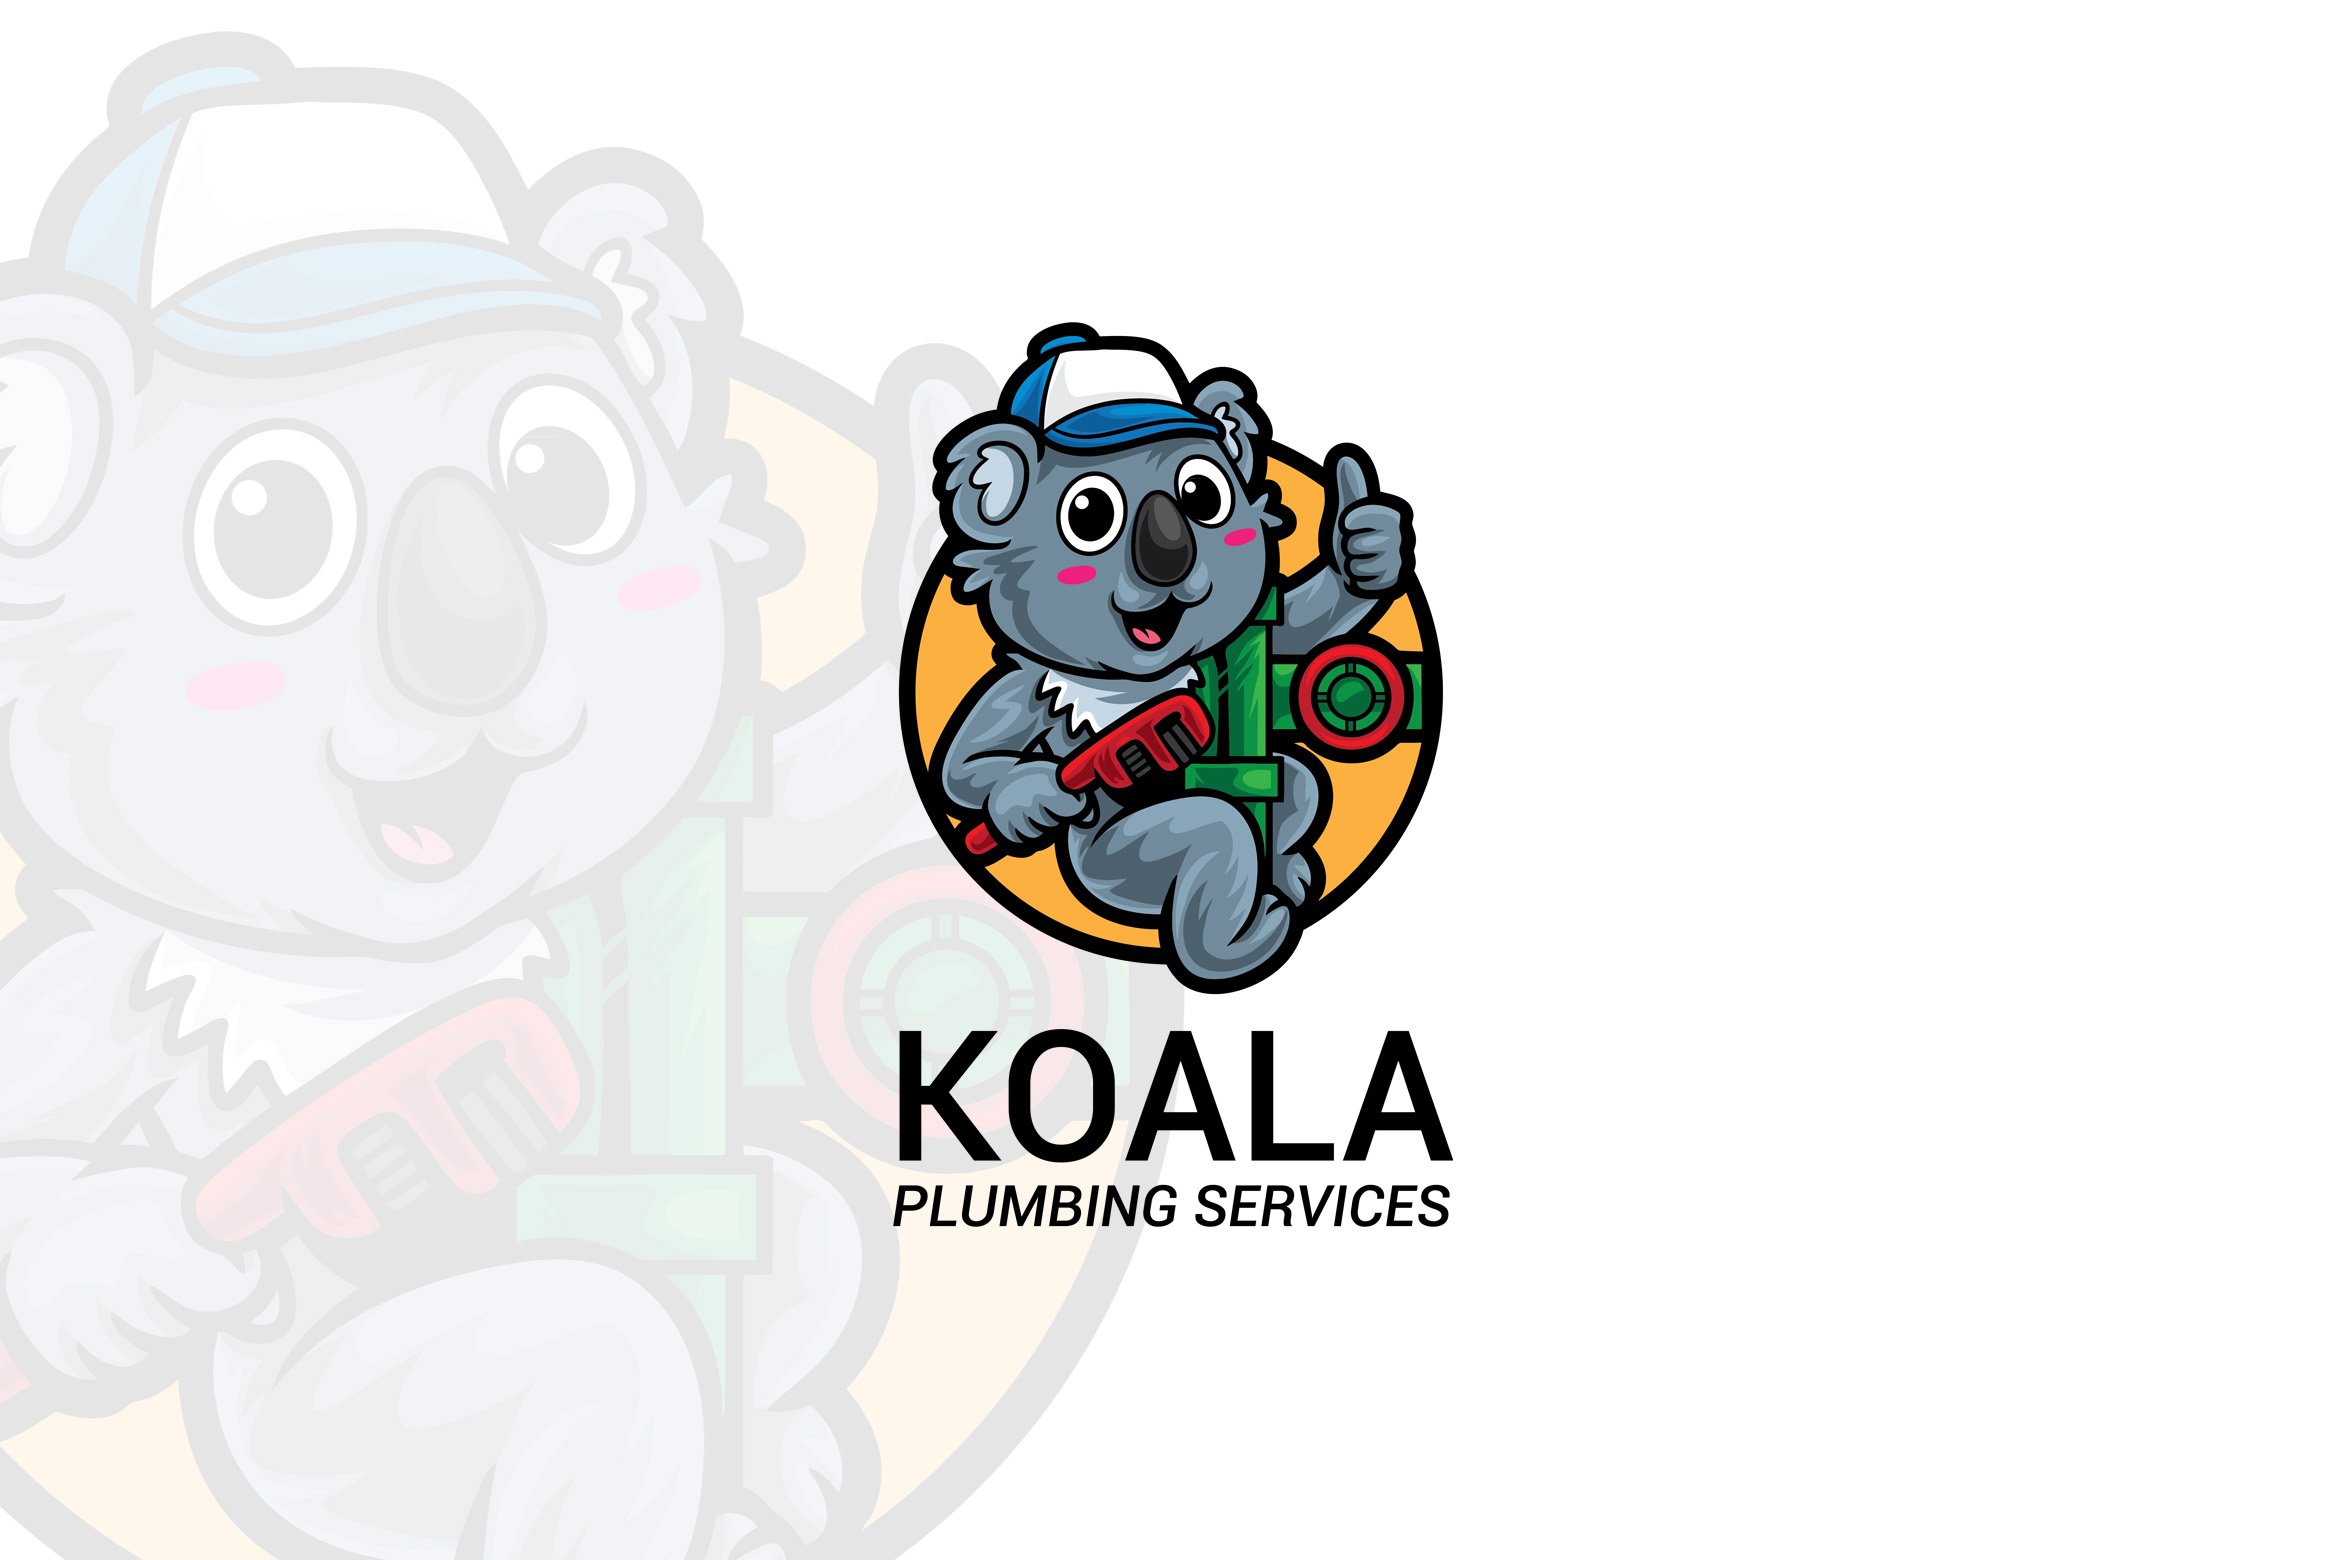 Koala Plumber Logo Mascot cover image.